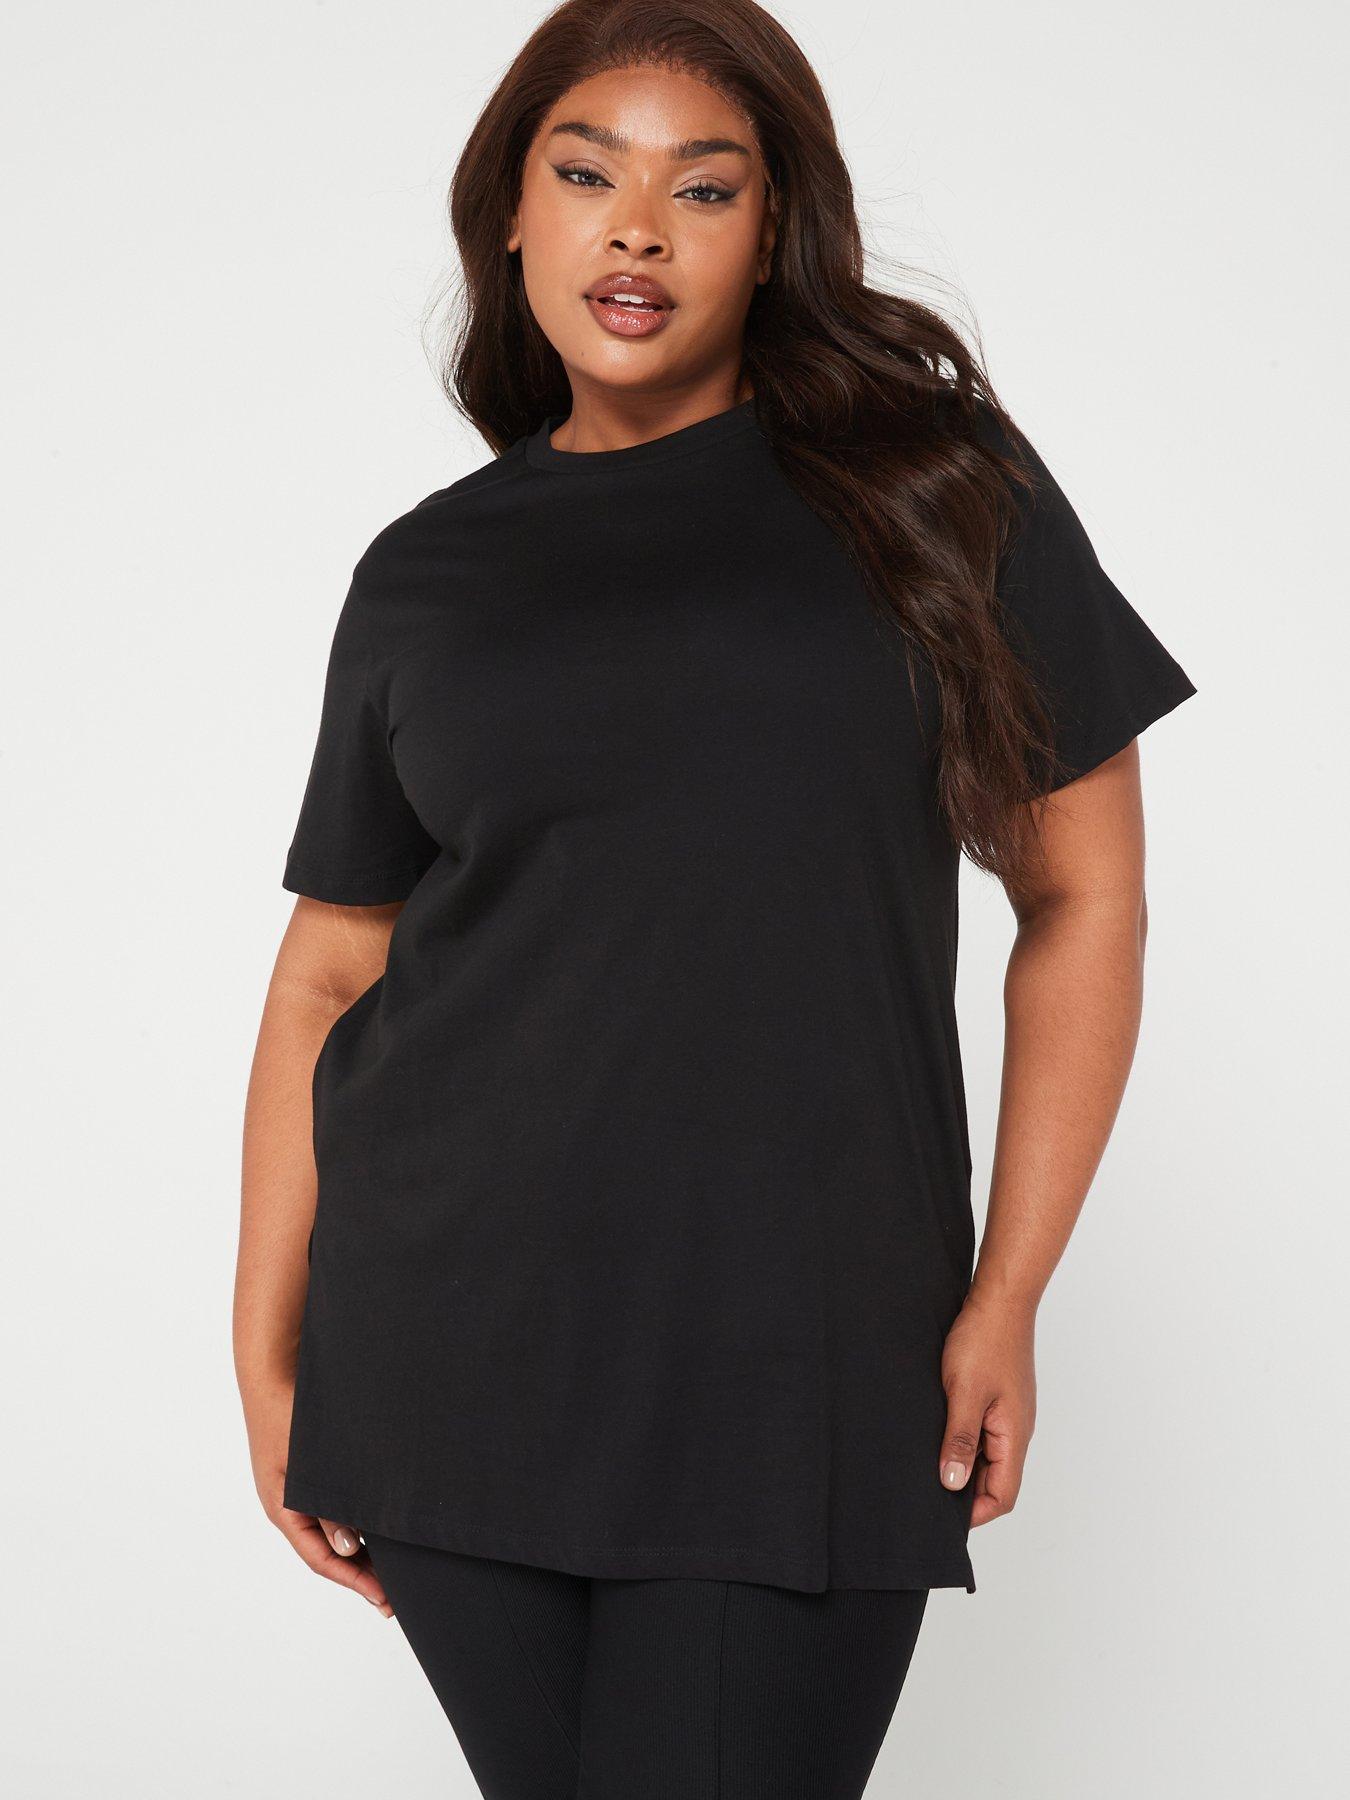 Tsmile Women Plus Size Striped Sweatshirt Stylish Letter Animal Print Long Sleeve Round Neck Pullover Tops Sihrts 